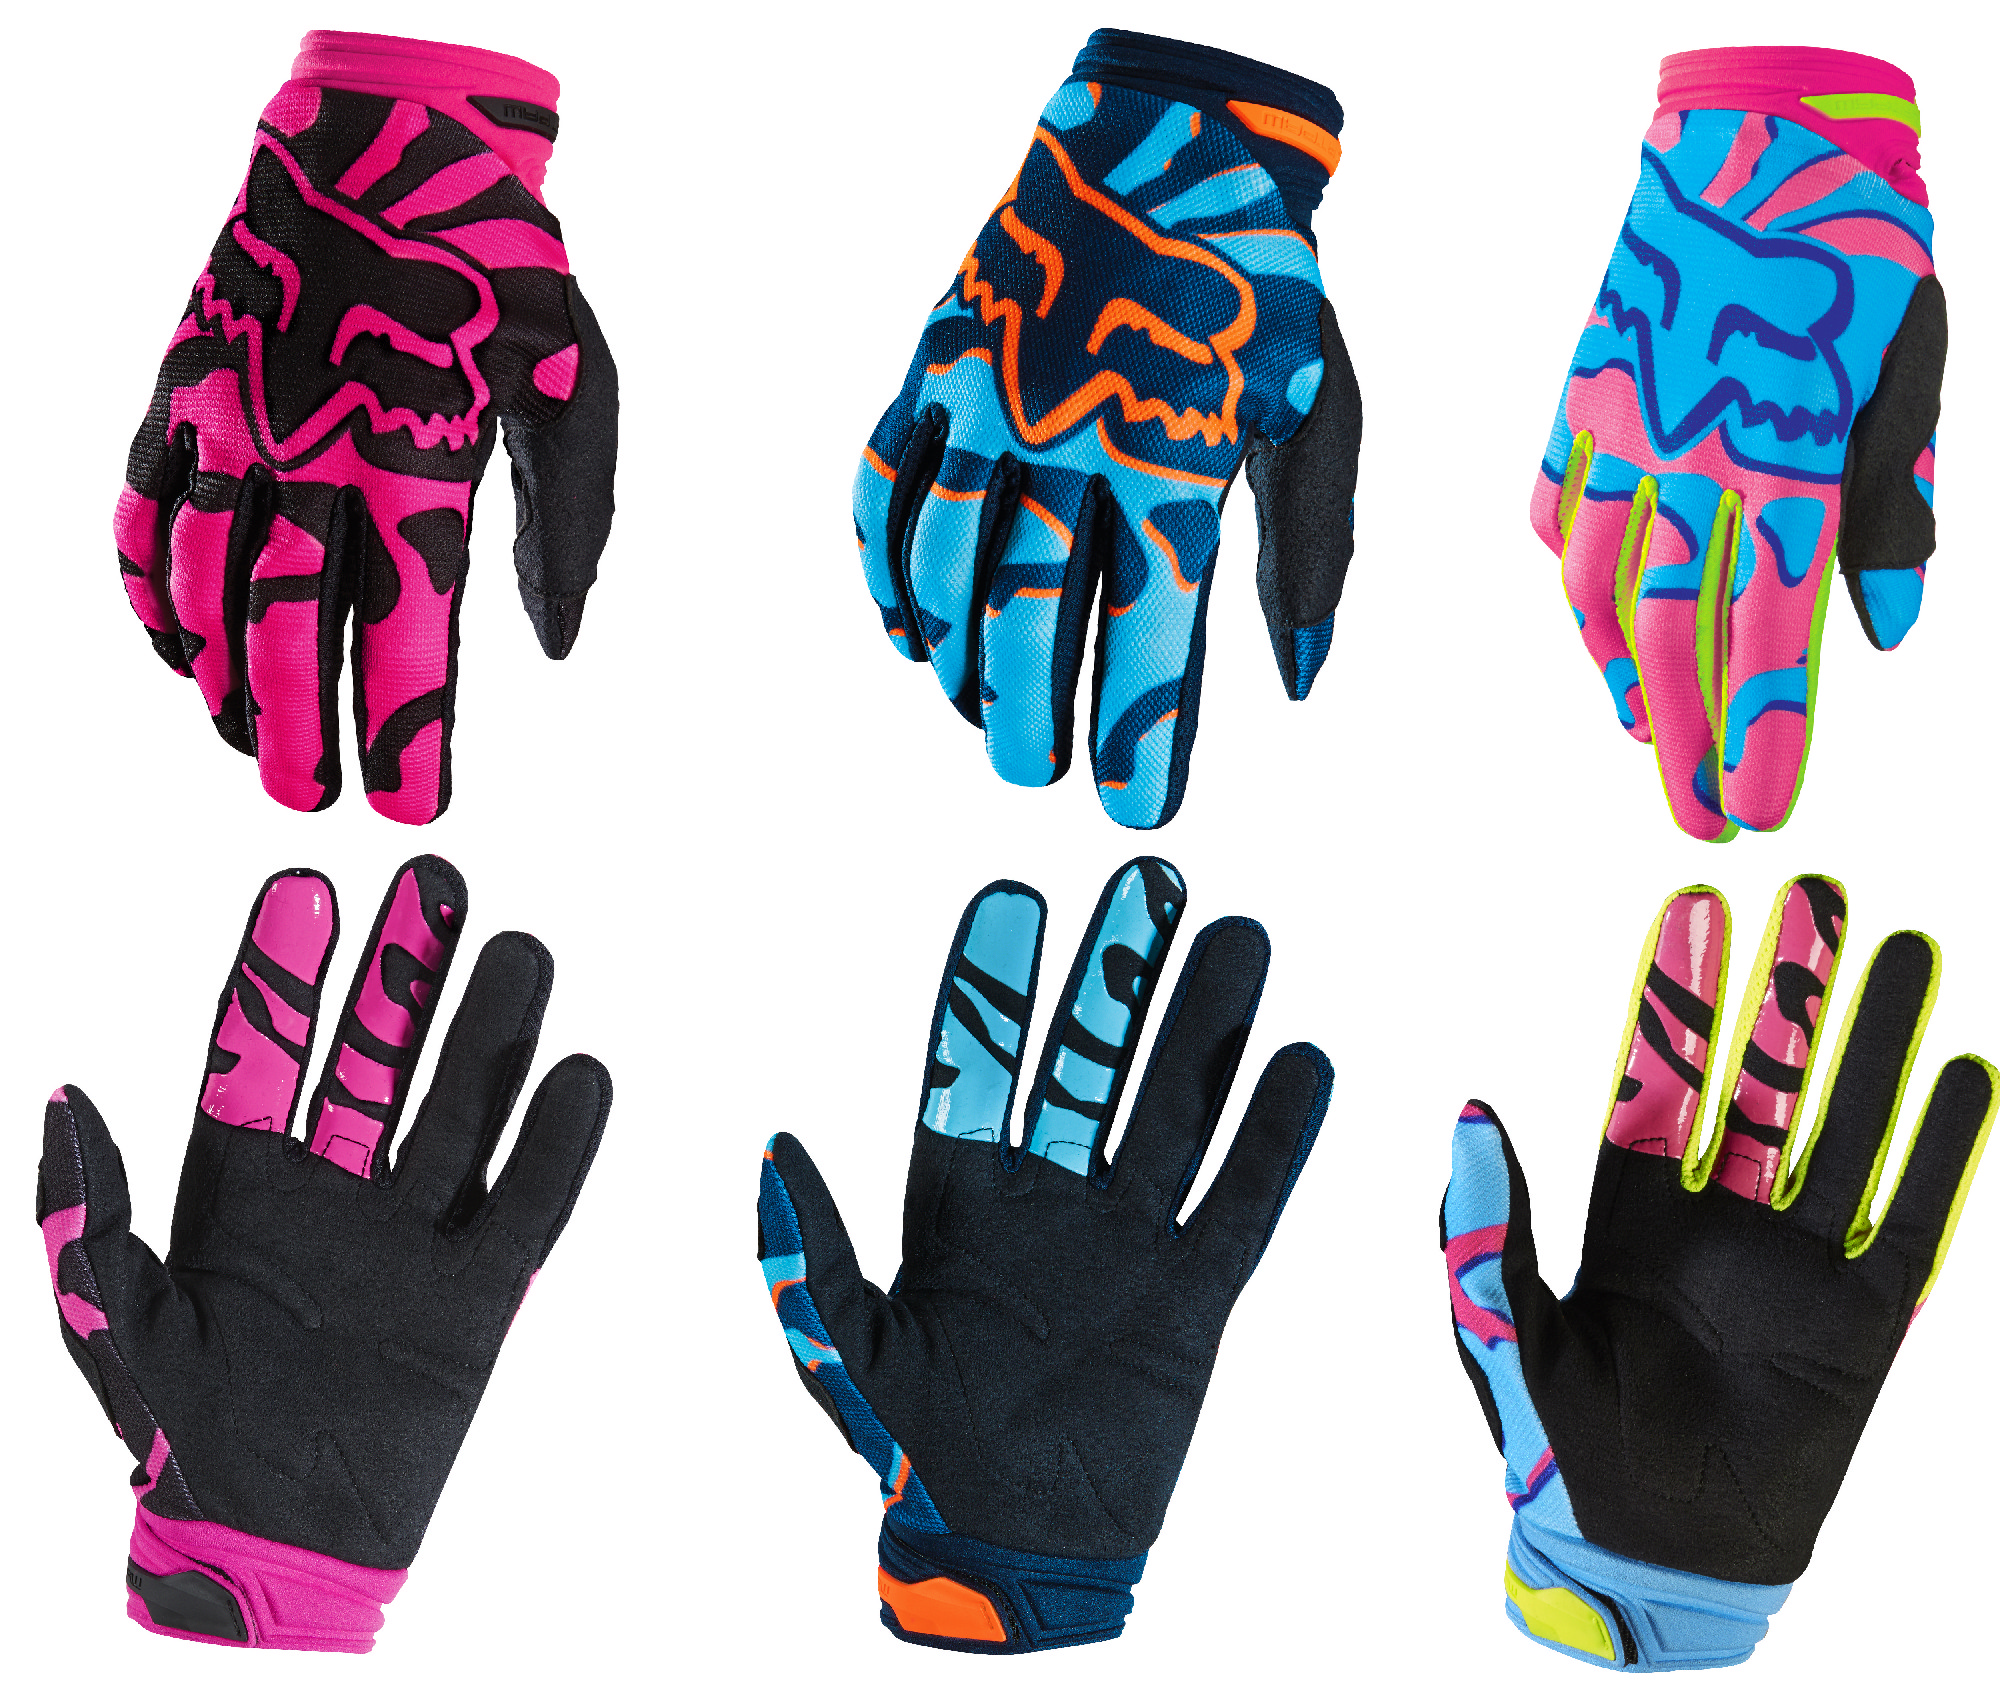 Fox Racing Womens All Sizes and Colors Dirtpaw Dirt Bike Gloves MX ATV 2016 | eBay2000 x 1697